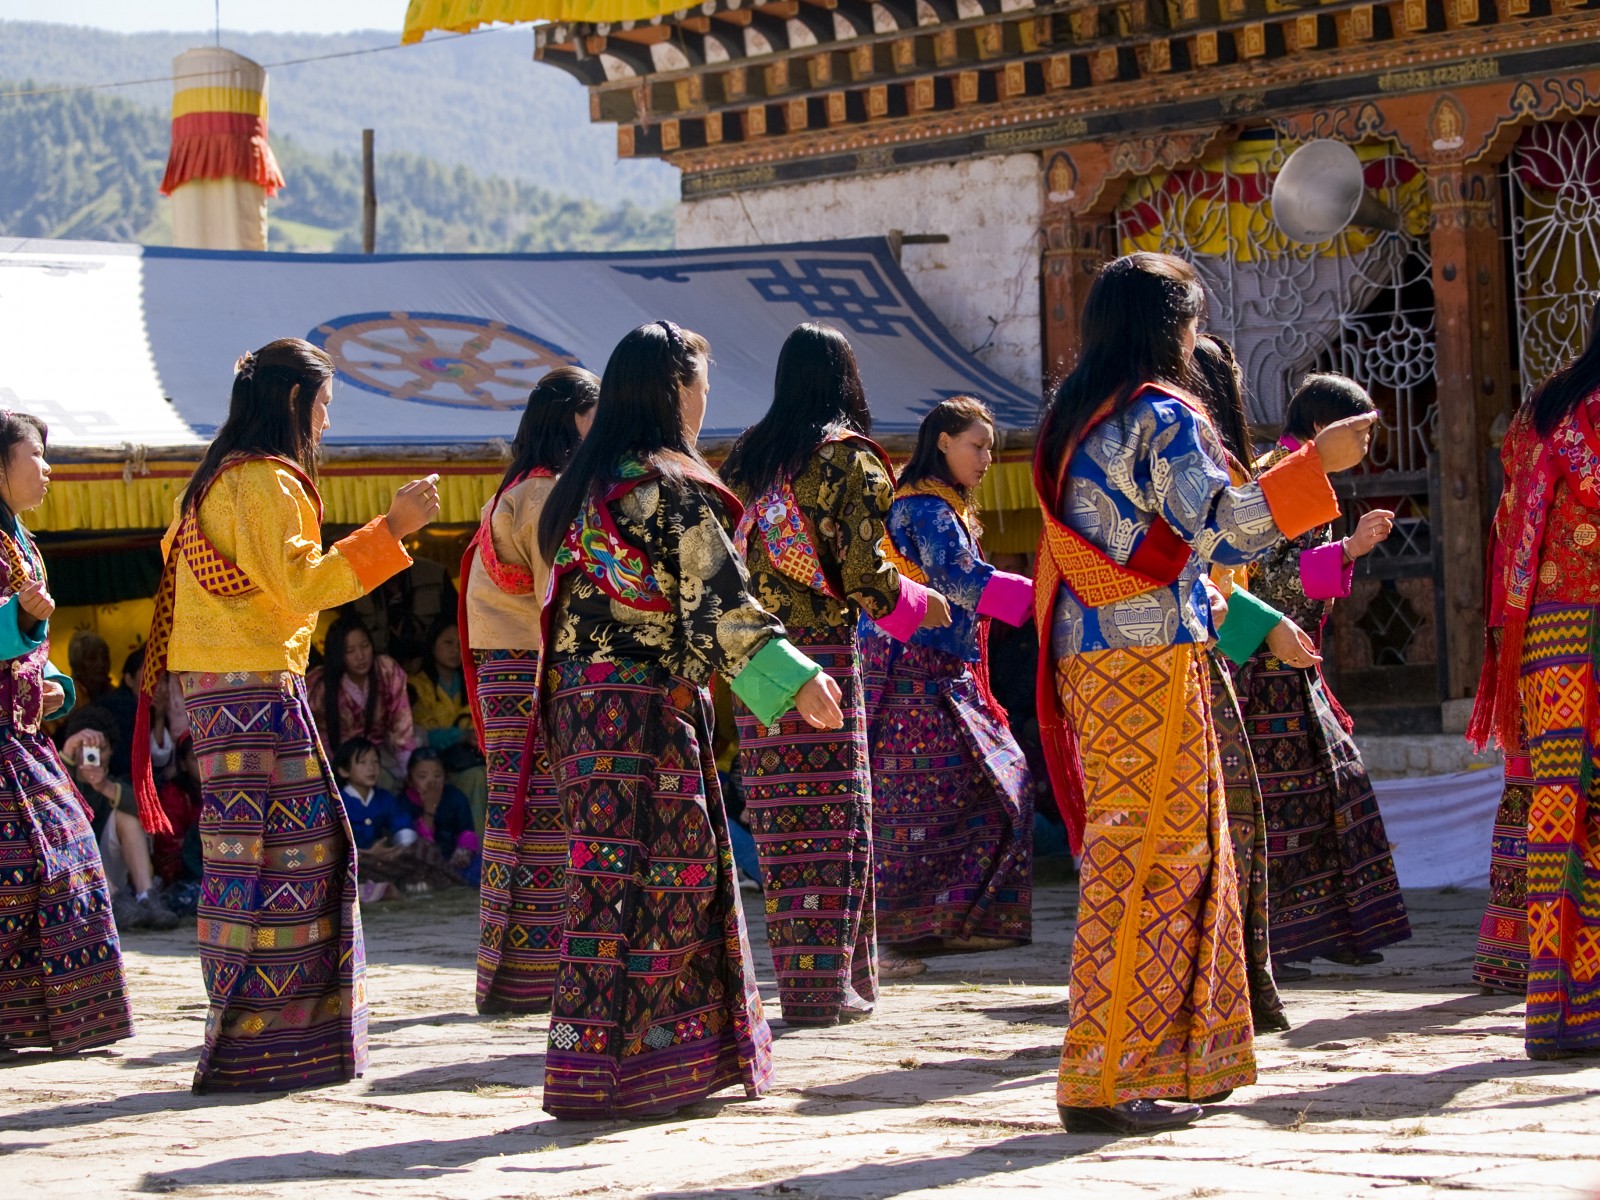 sherpa dancing, Nepal, Supplier